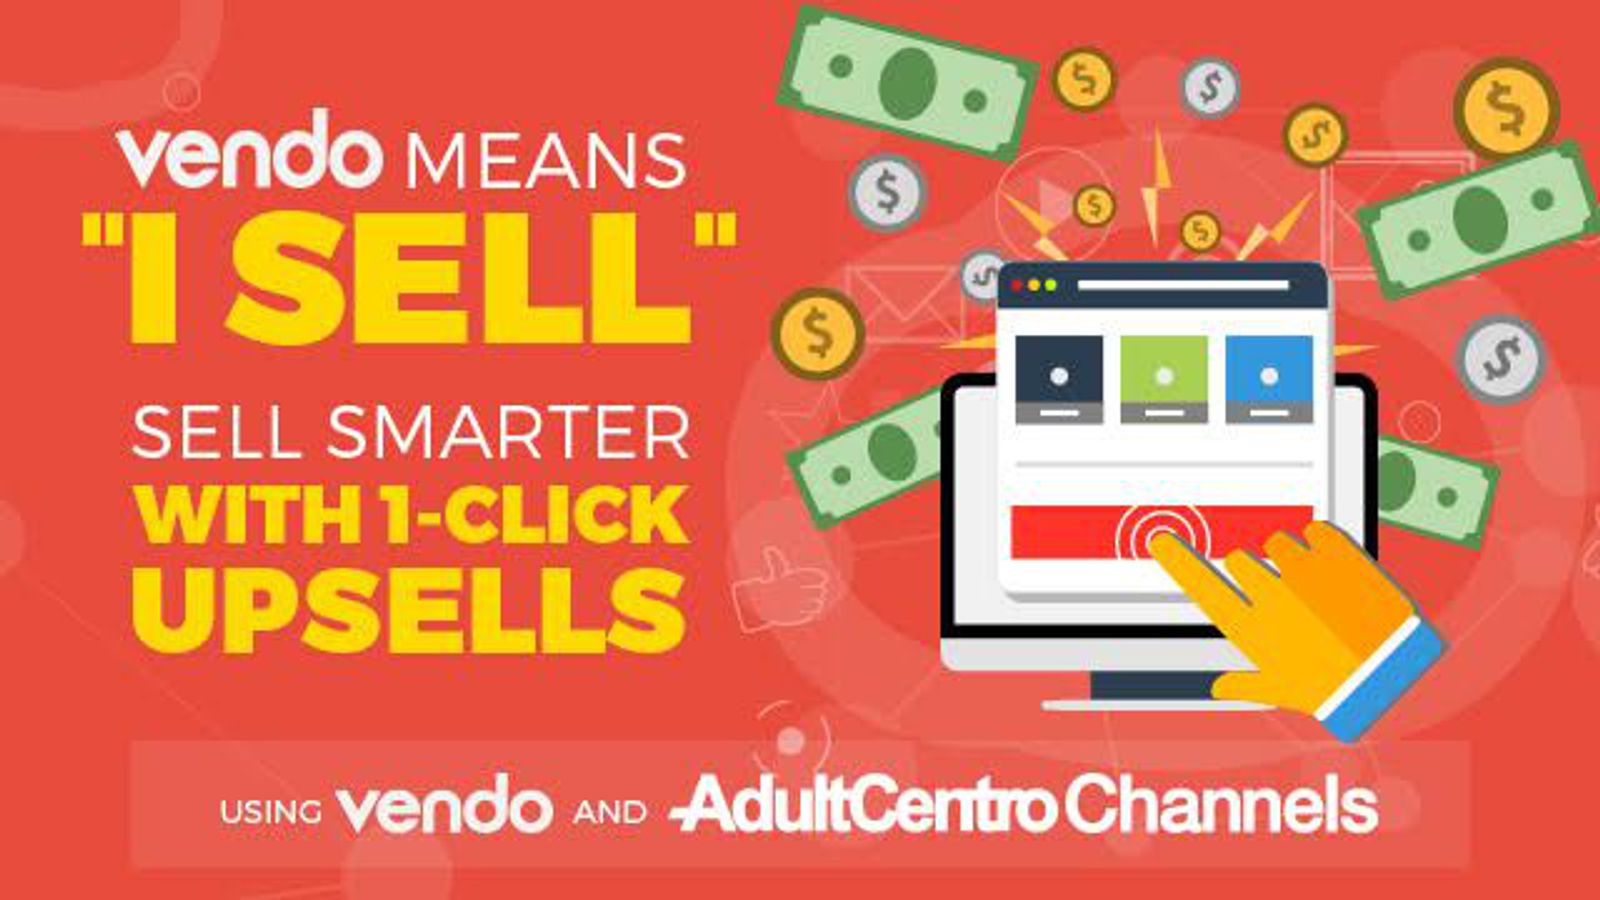 AdultCentro Channels Integrates Vendo Services